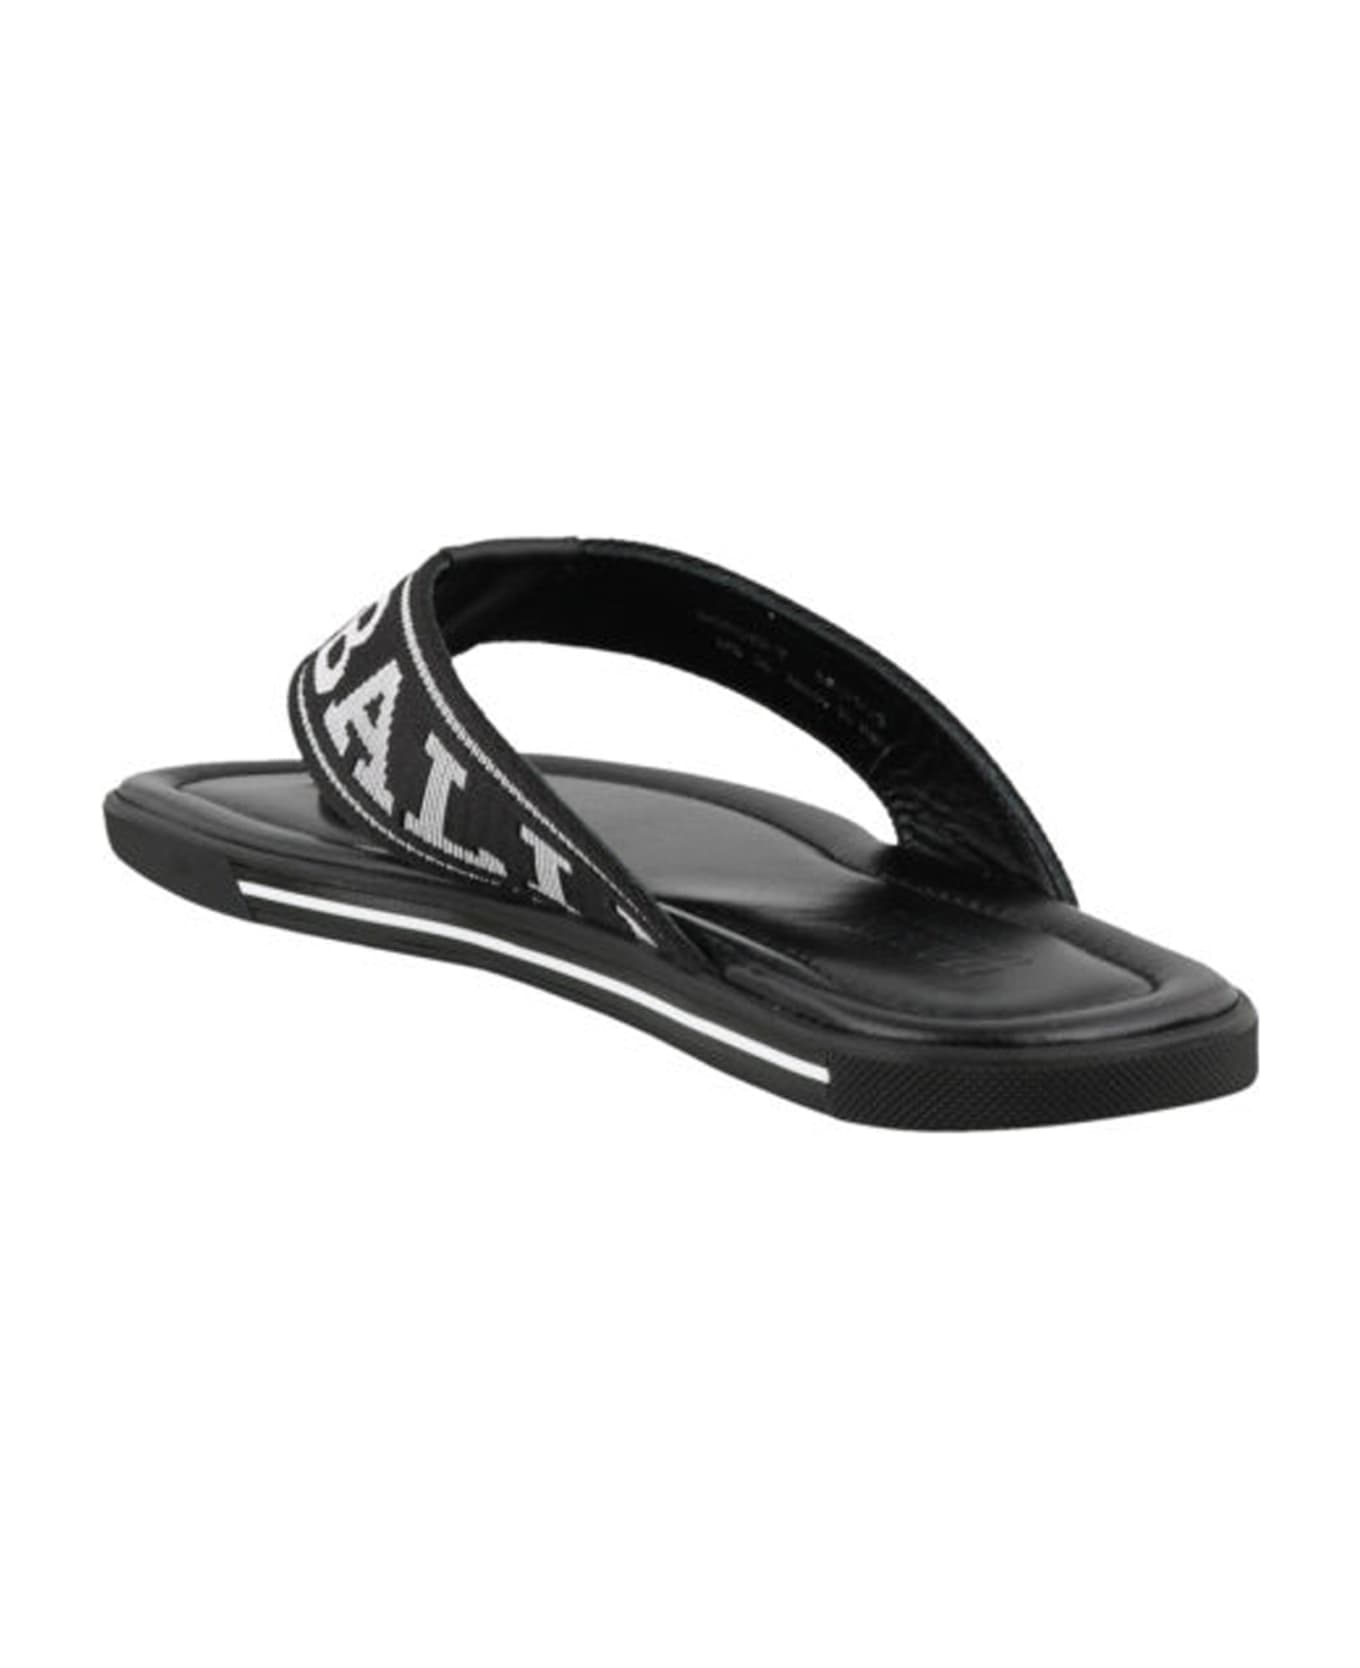 Bally Border Sandals - Black